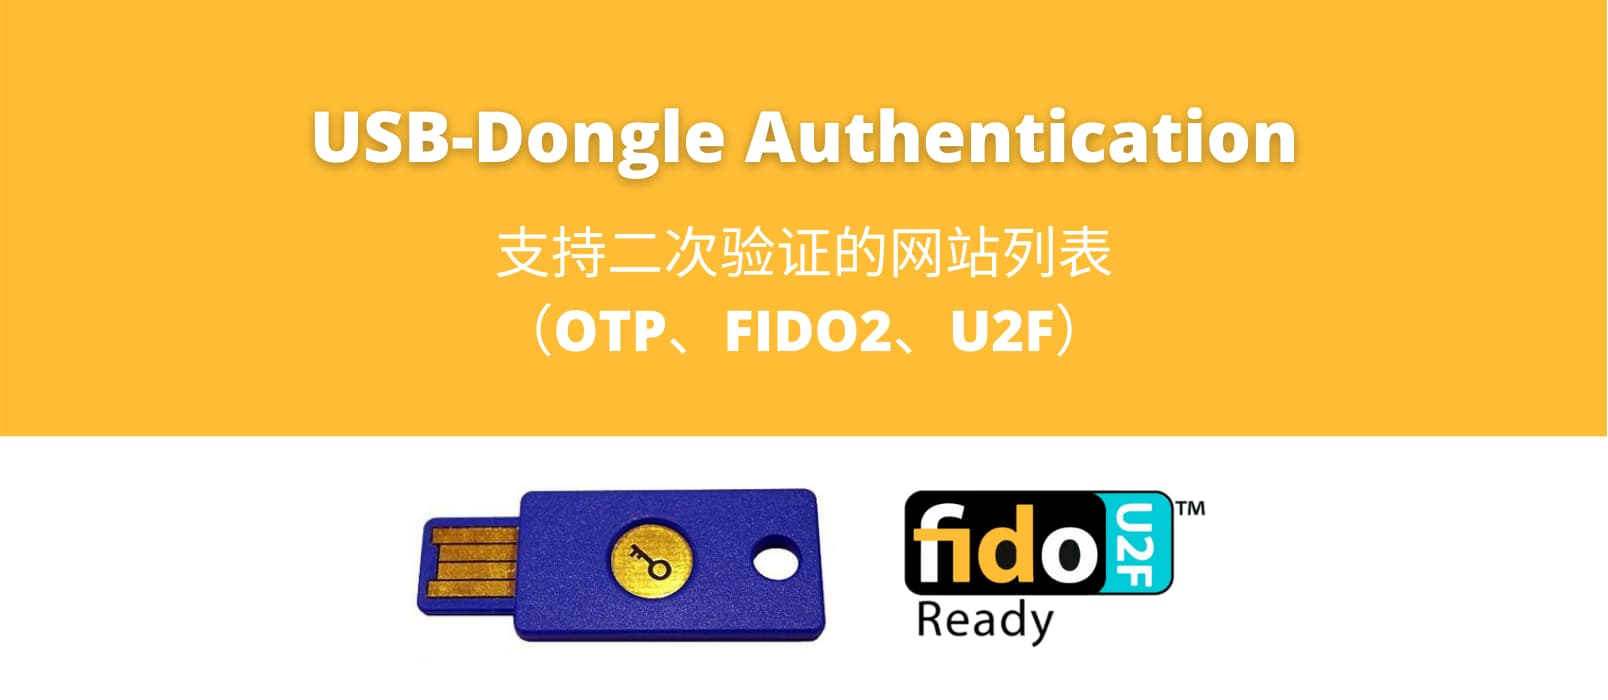 USB-Dongle Authentication - 支持二次验证的网站列表（OTP、FIDO2、U2F）